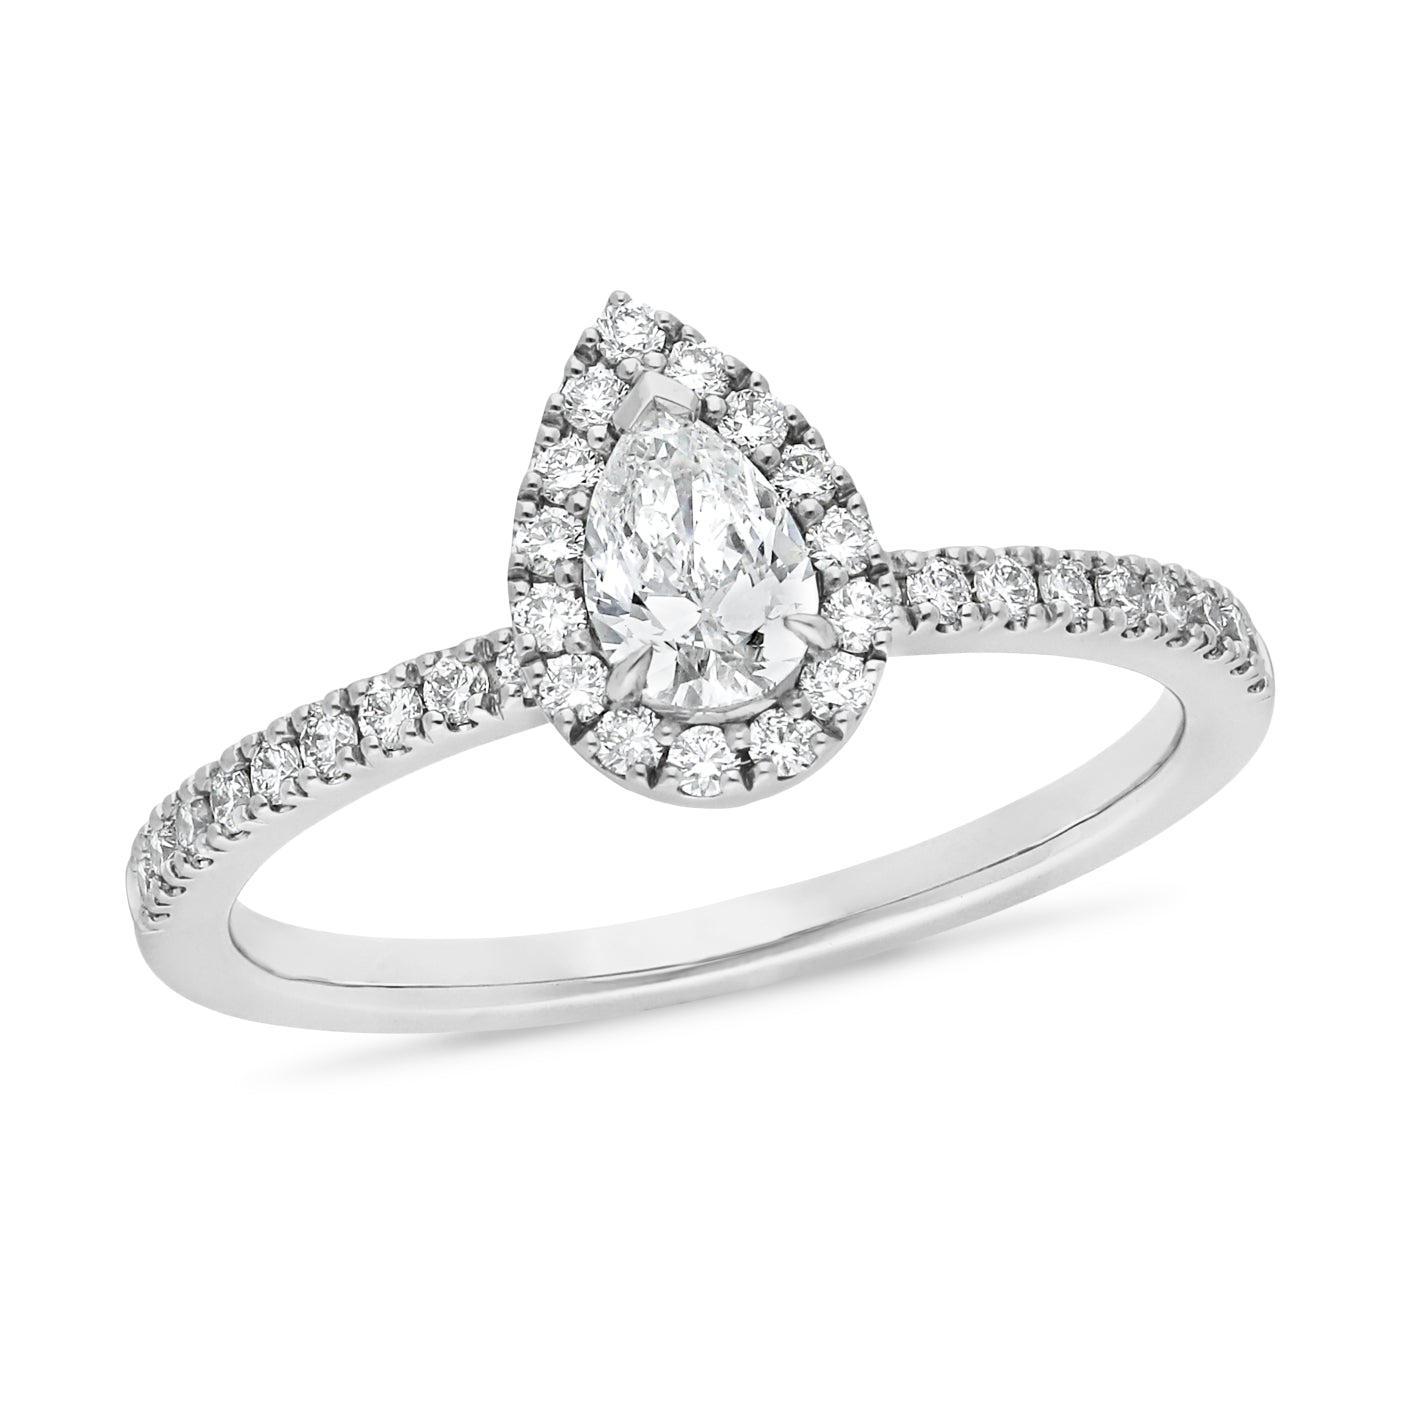 18ct White Gold Pear cut Diamond engagement ring, 0.30 carat centre